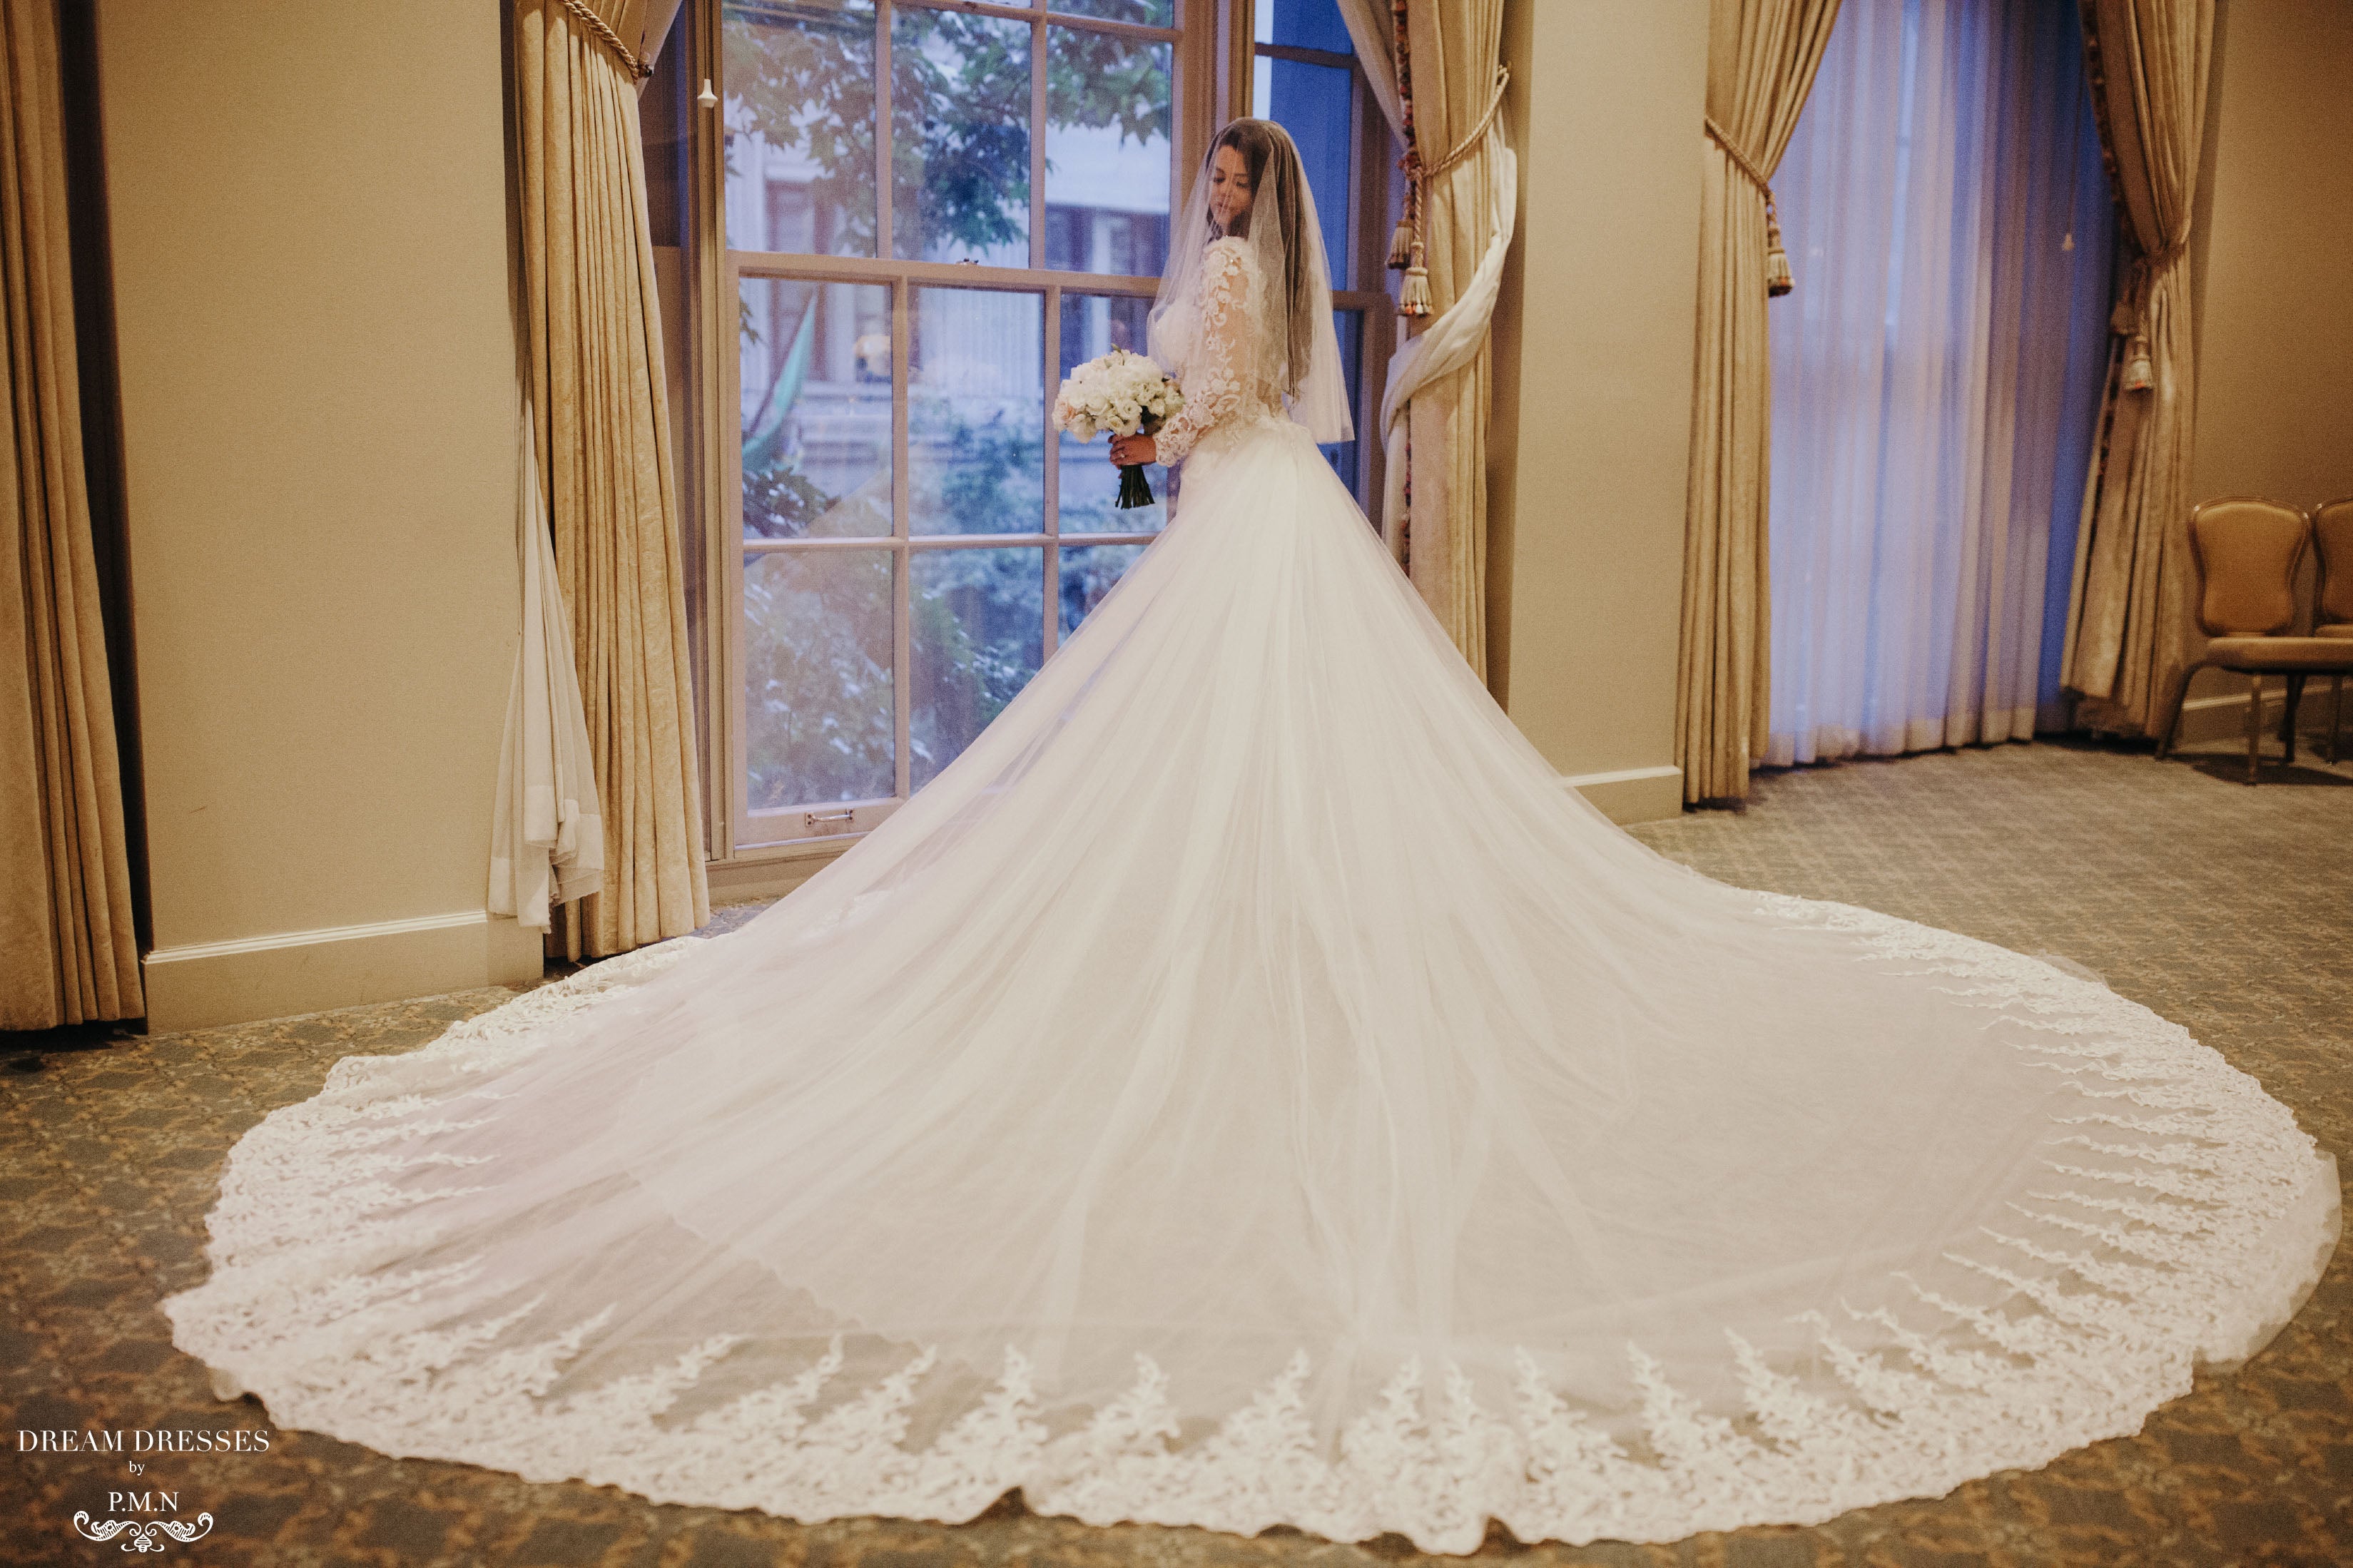 Detachable Tulle Bridal Skirt, Dream Dresses by P.M.N